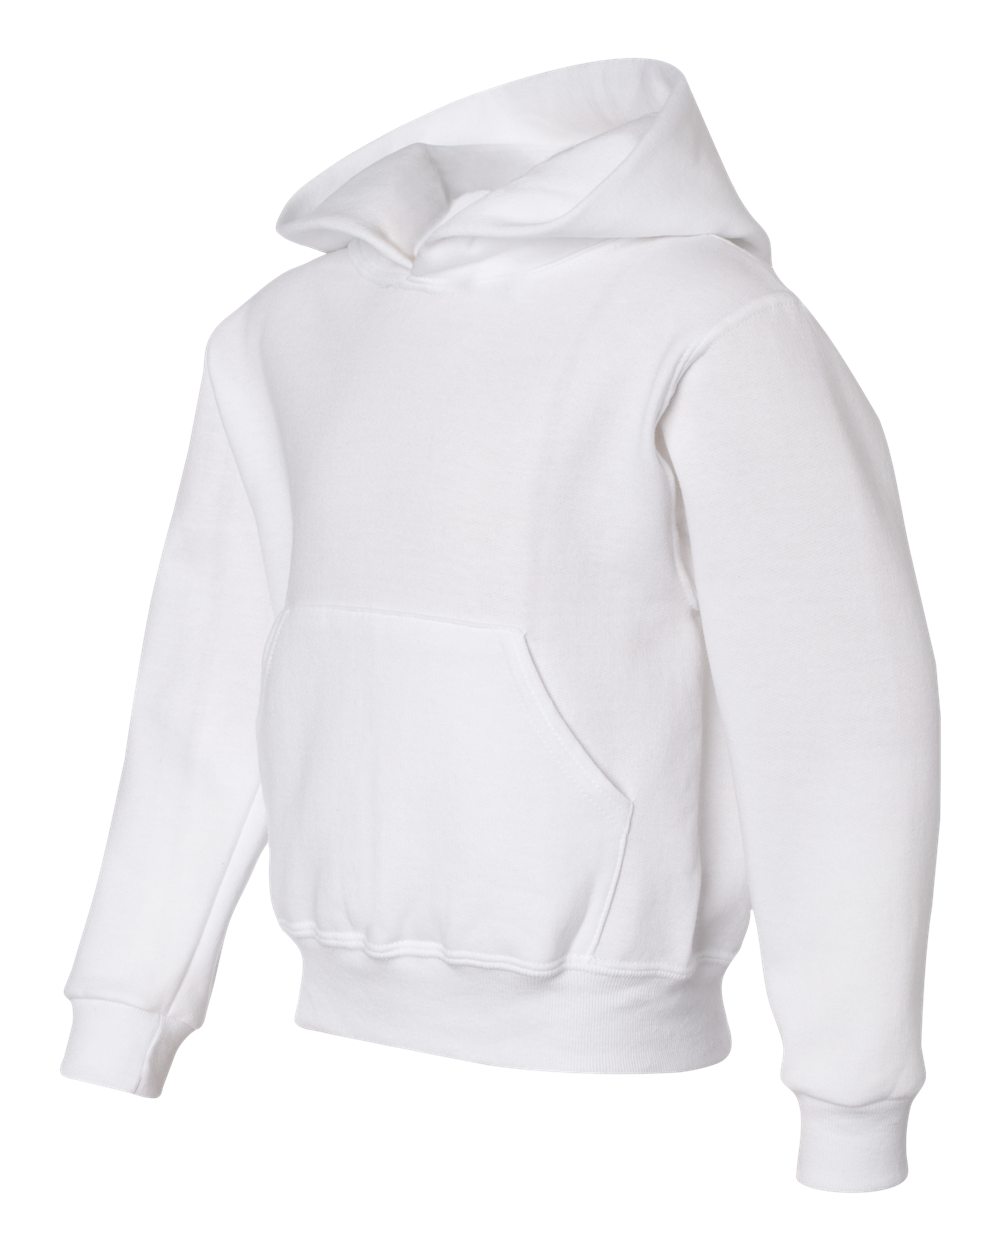 JERZEES 996YR - NuBlend Youth Hooded Sweatshirt